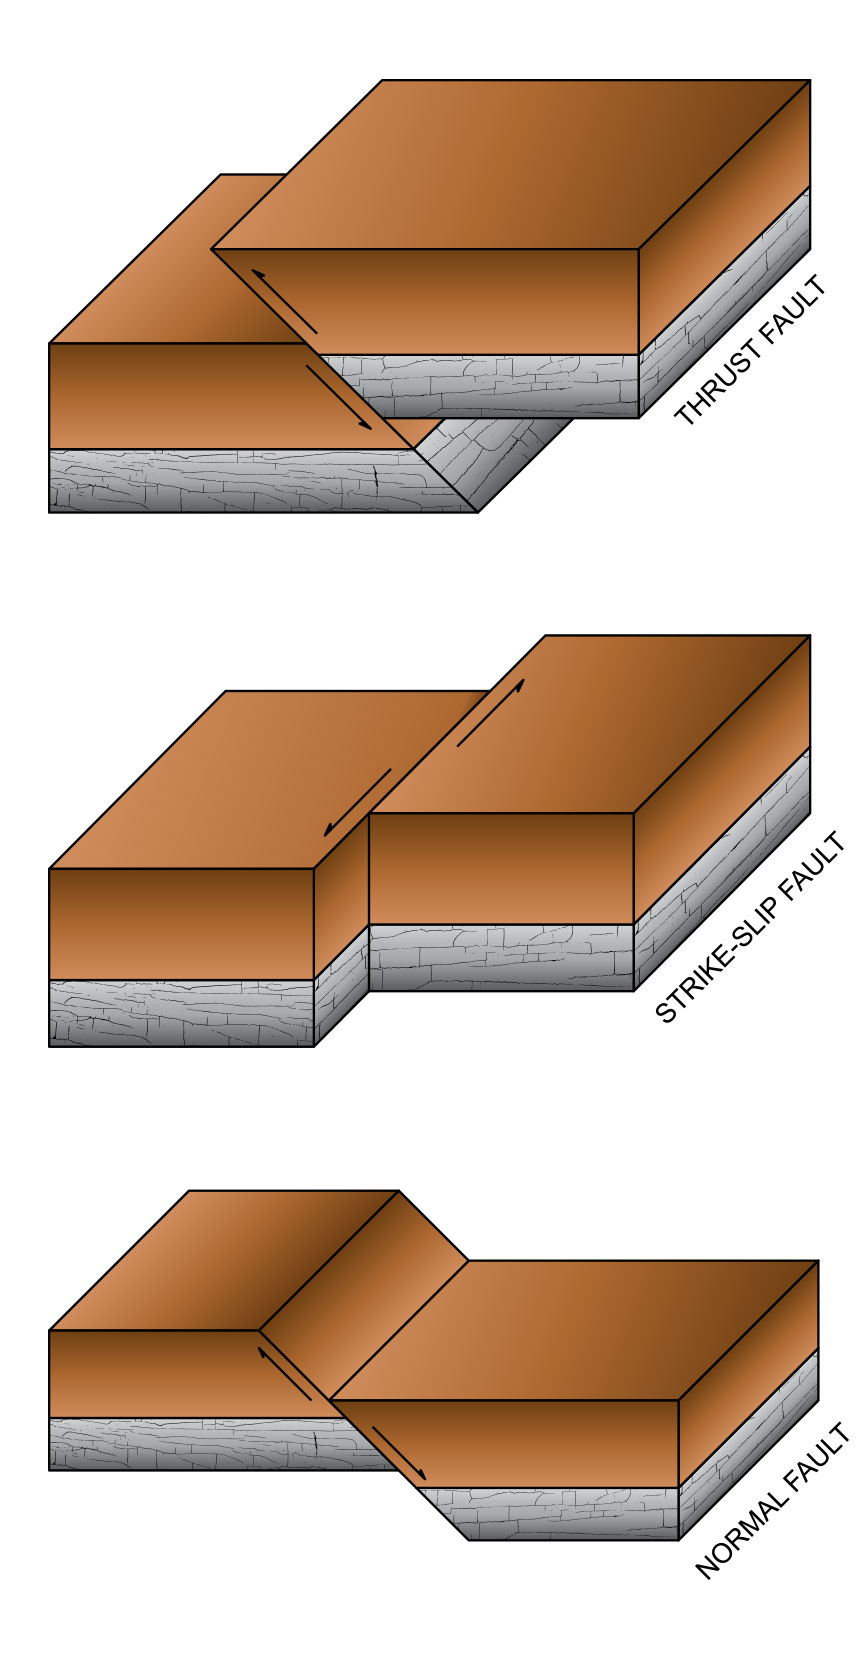 geological faults illustratio